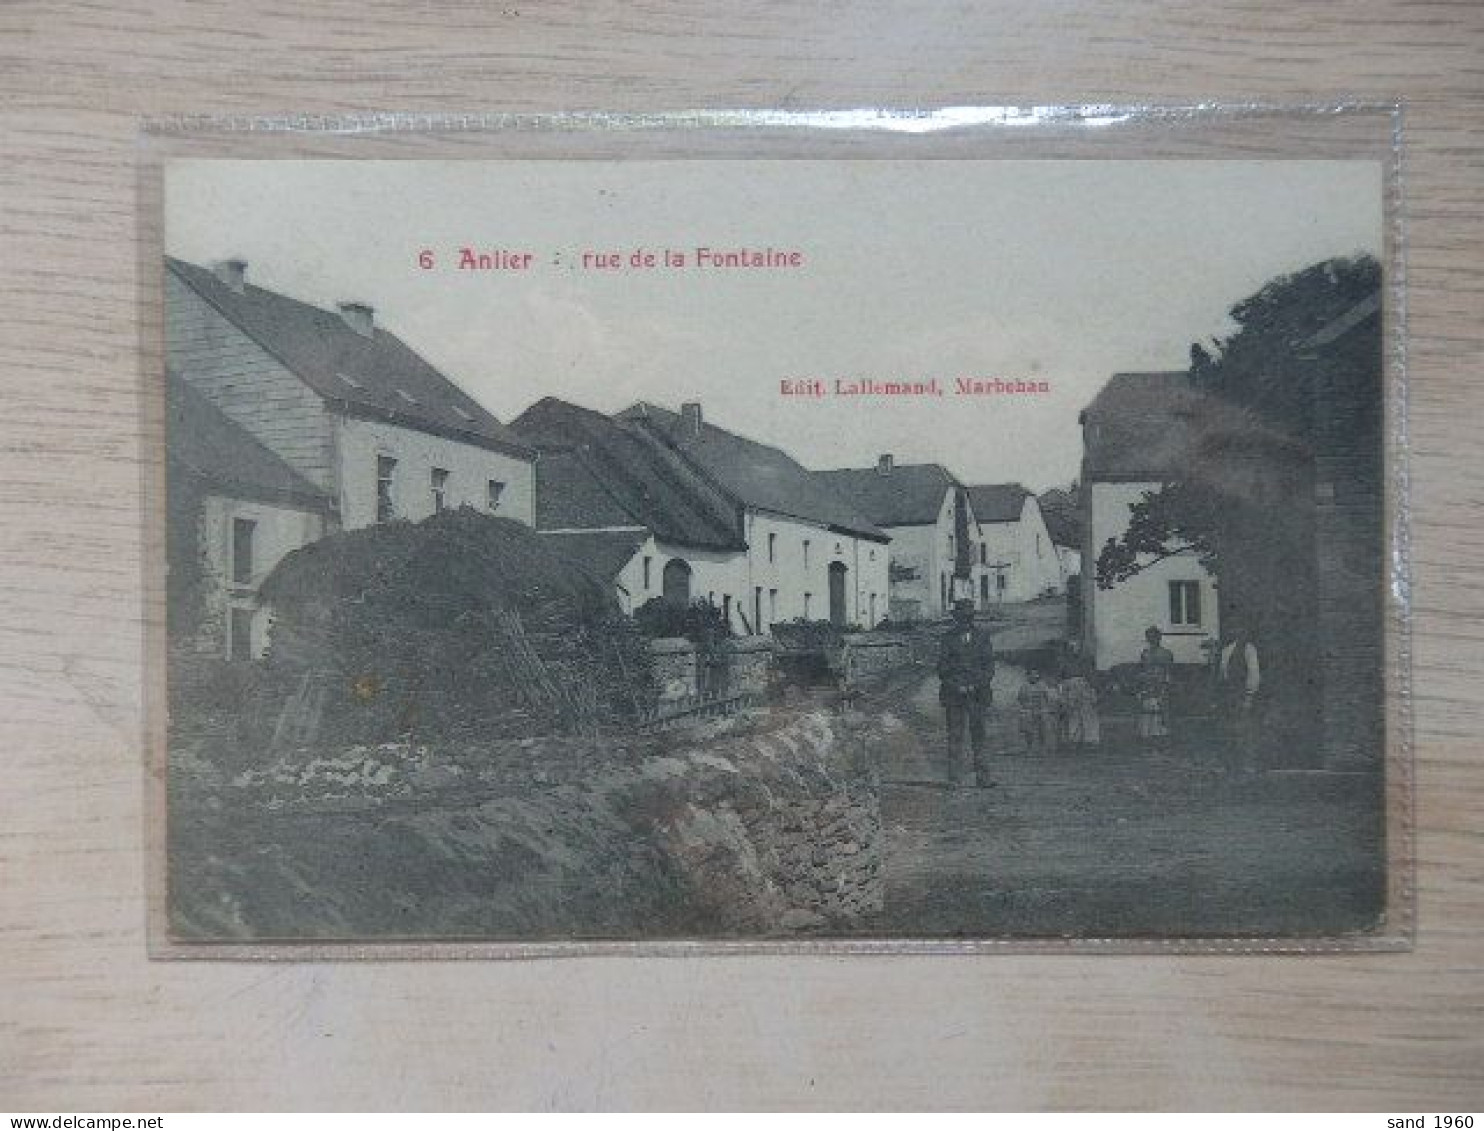 Anlier "Prov Lux" - N°6 - Ruede La Fontaine - Ed: Lallemand - Circulé: 1918 - 2 Scans - Habay